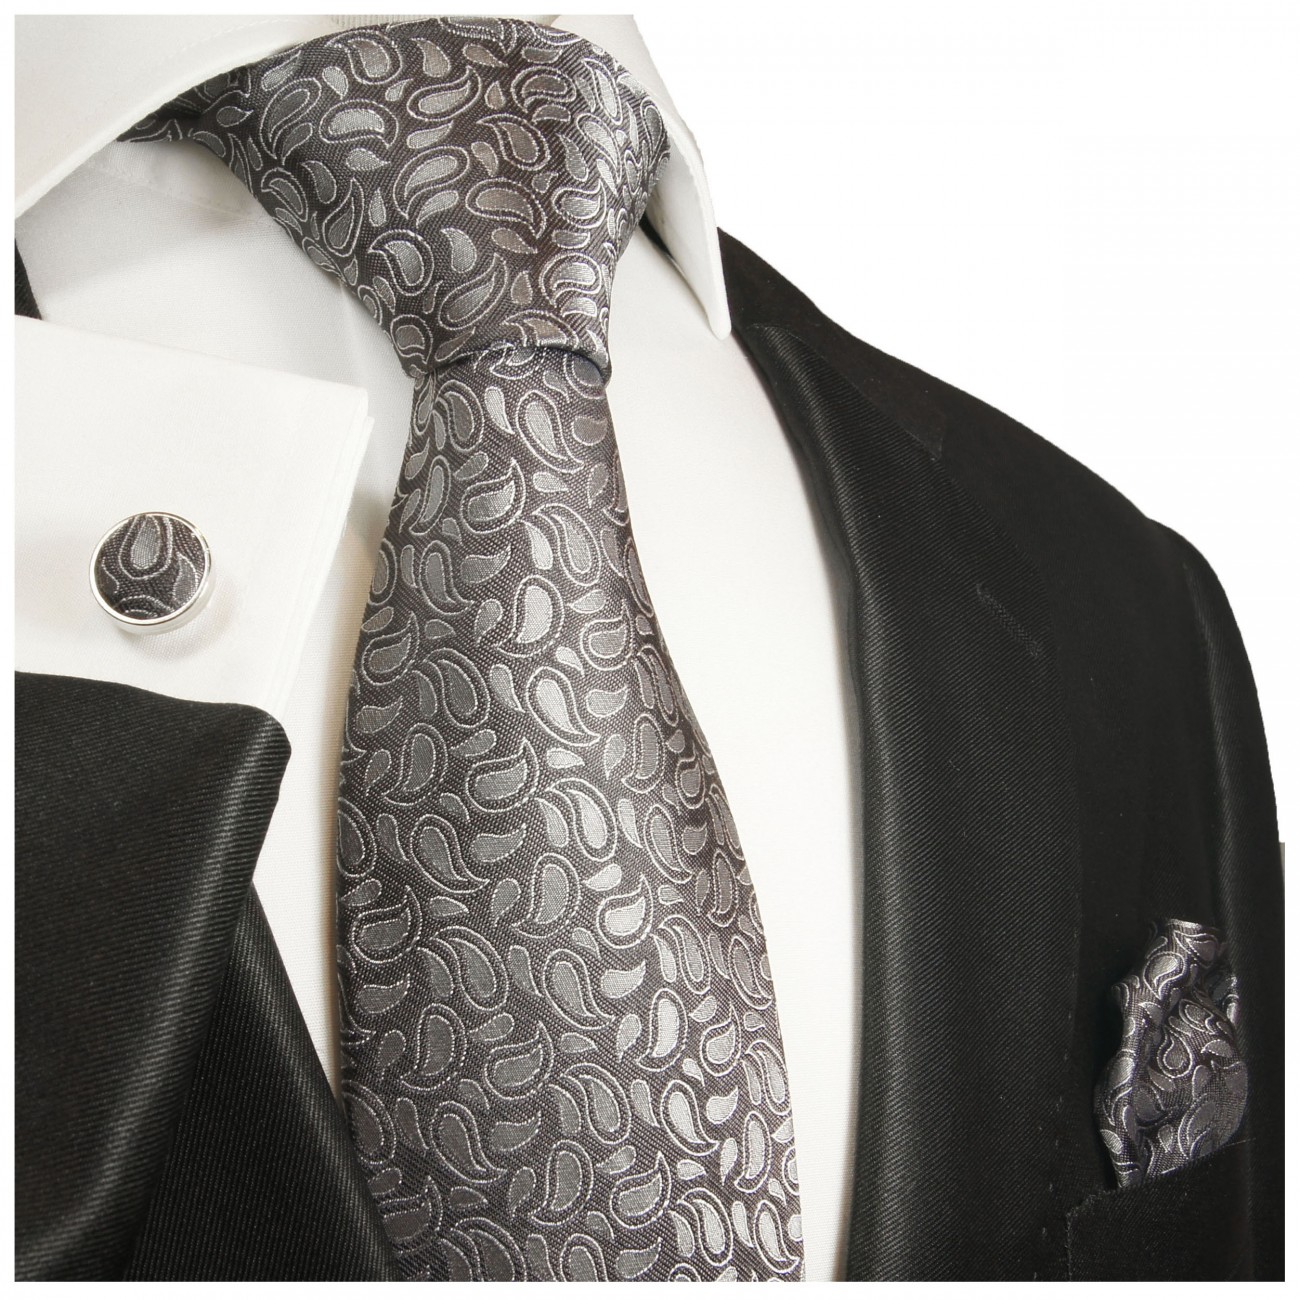 Extra lange Krawatte 165cm - silber grau paisley